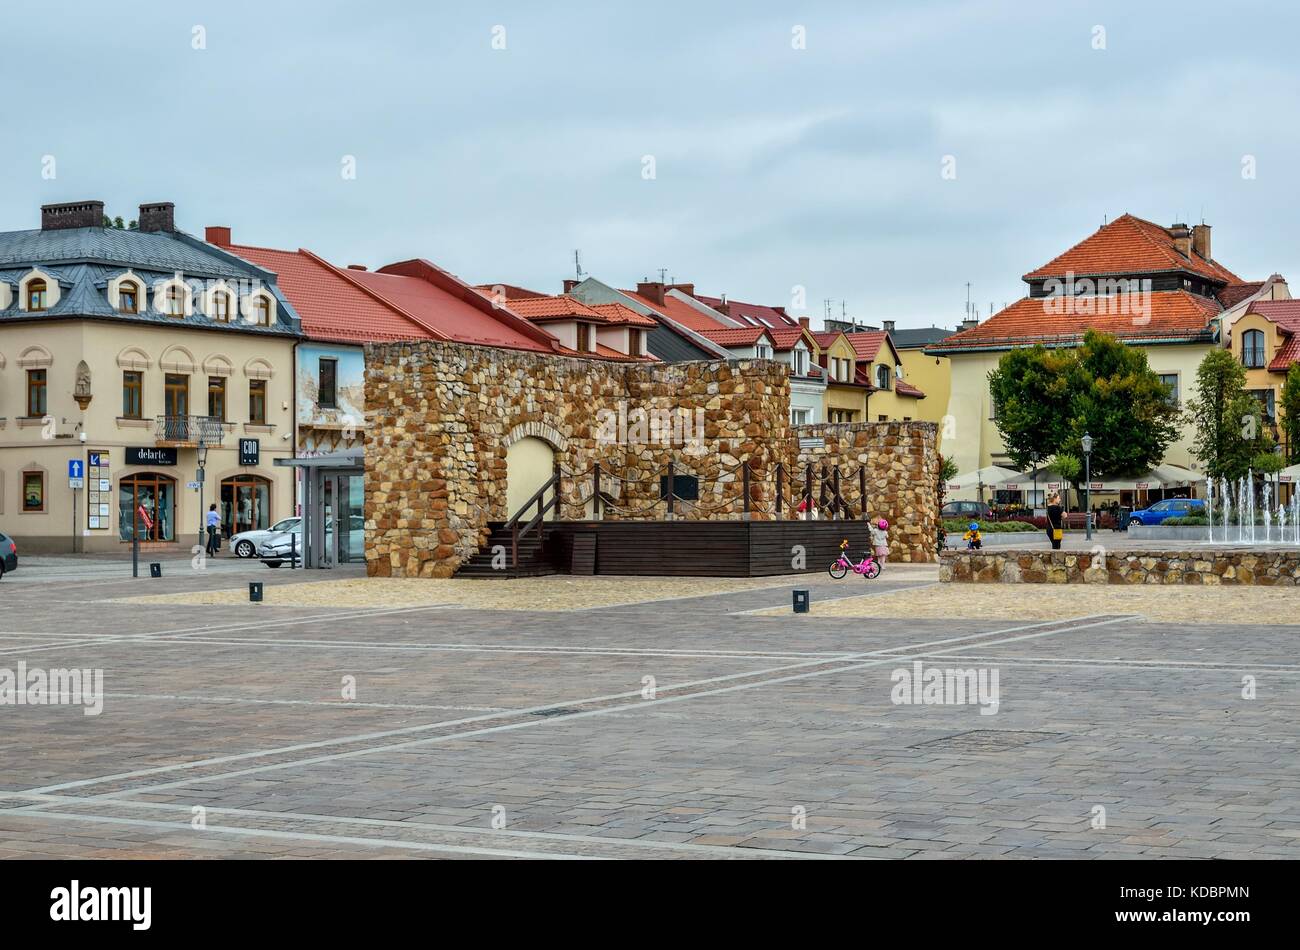 OLKUSZ, POLAND - AUGUST 13, 2017: Beautiful market in Olkusz Town, Poland. Stock Photo